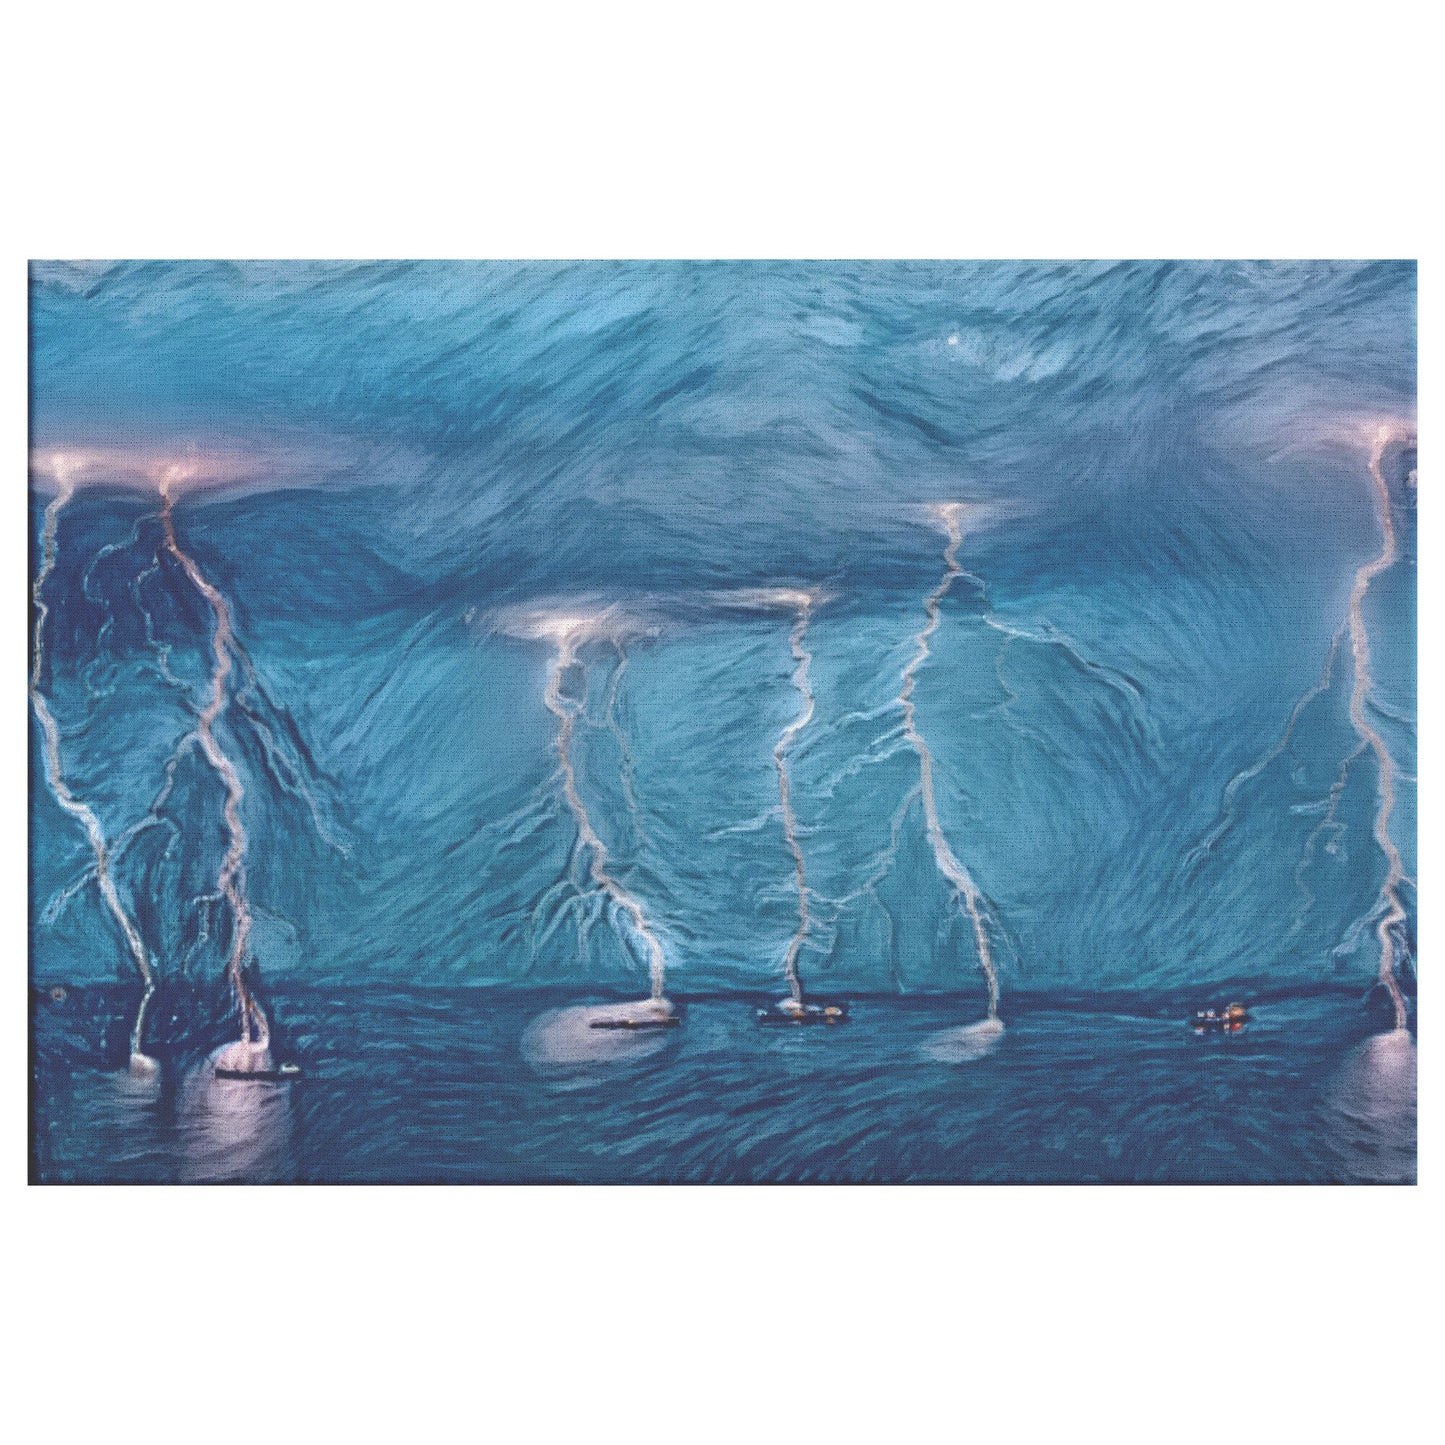 Blue Painting of Lightning over Ocean, Ocean Storm Print, AI Art